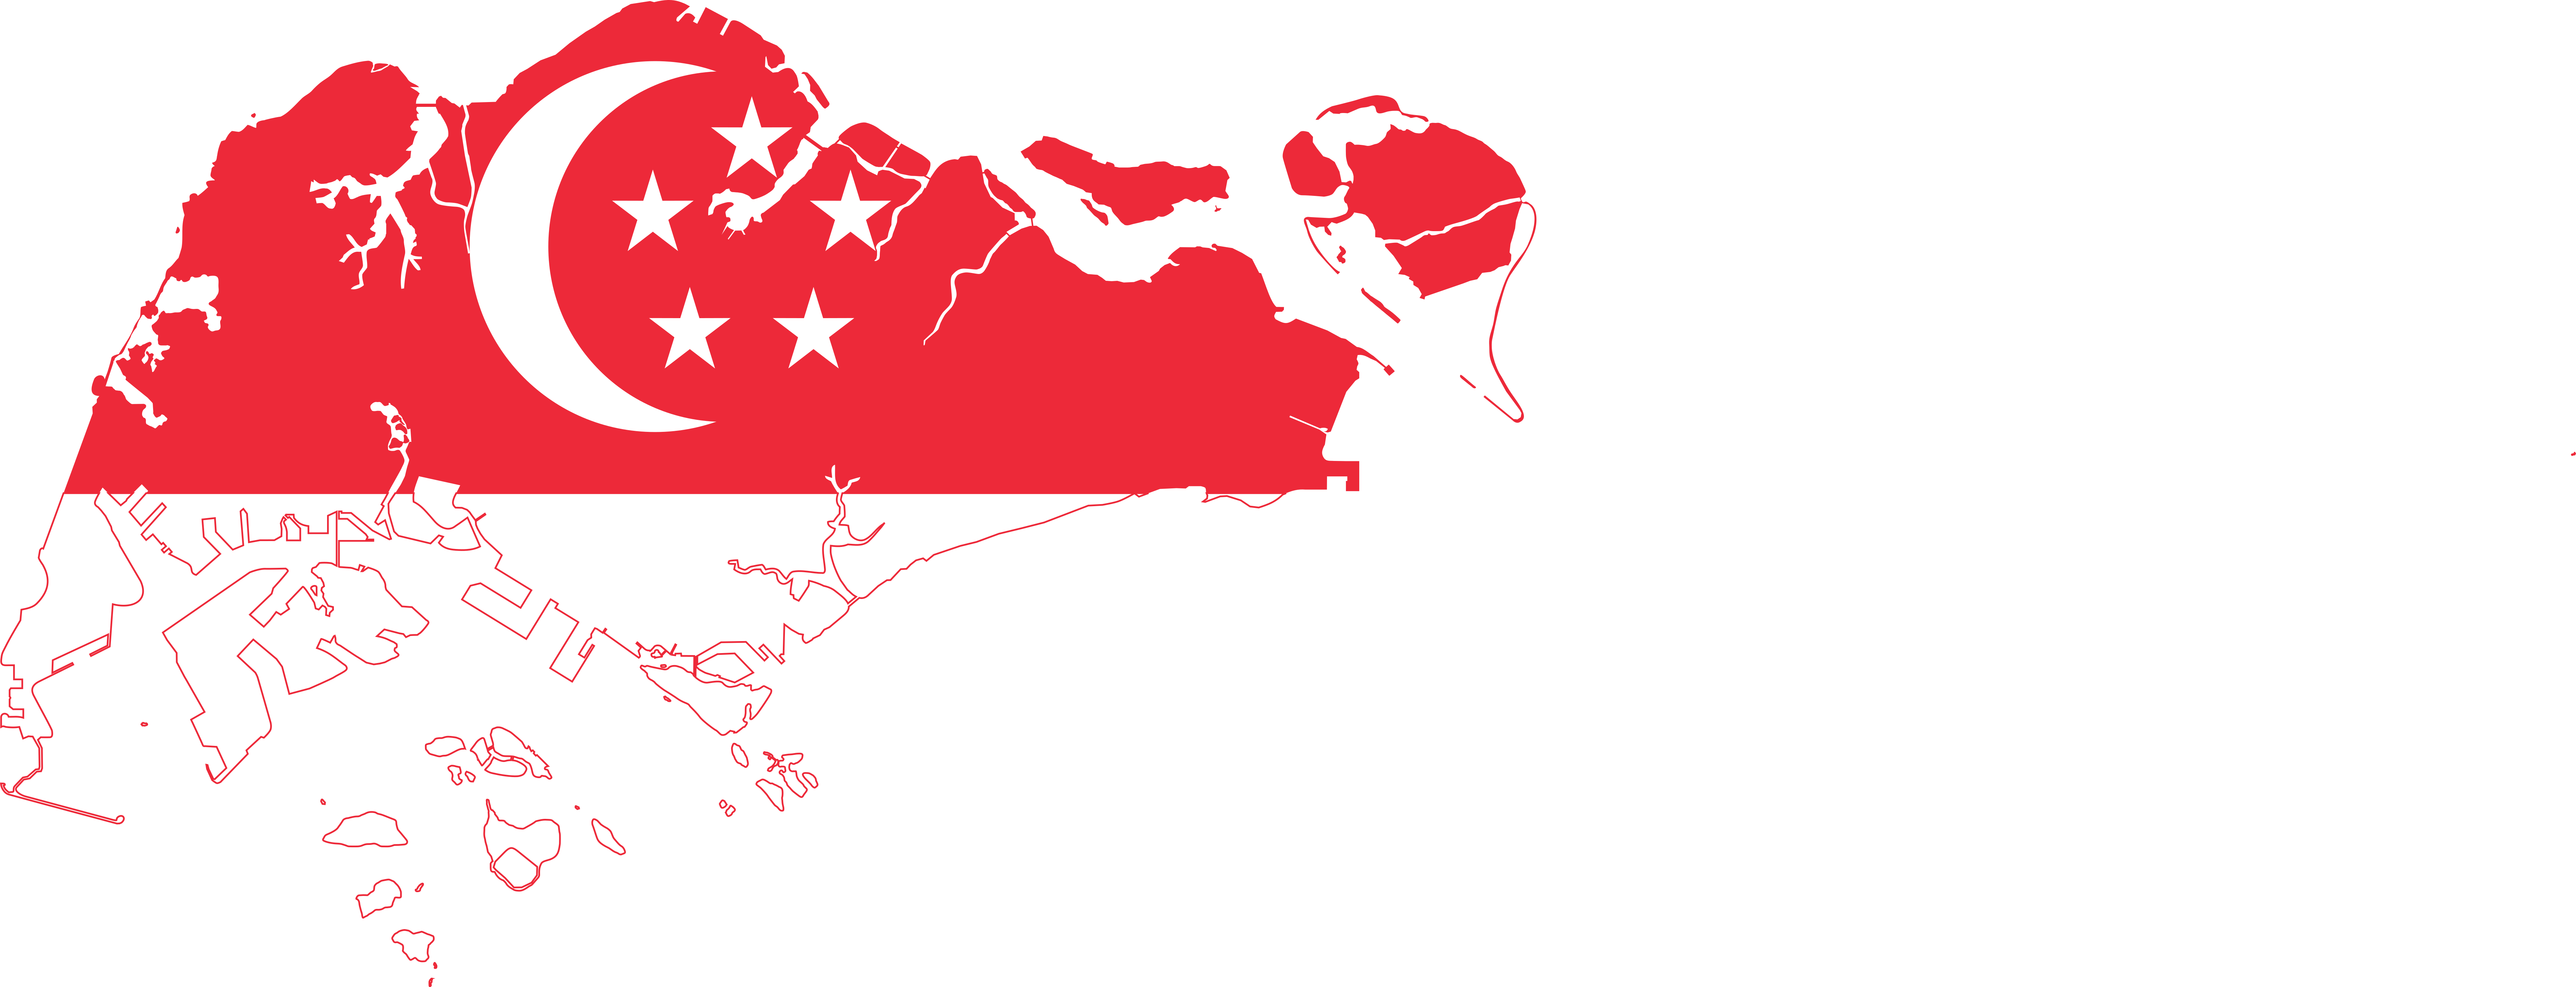 Singapore Flag Background PNG Image